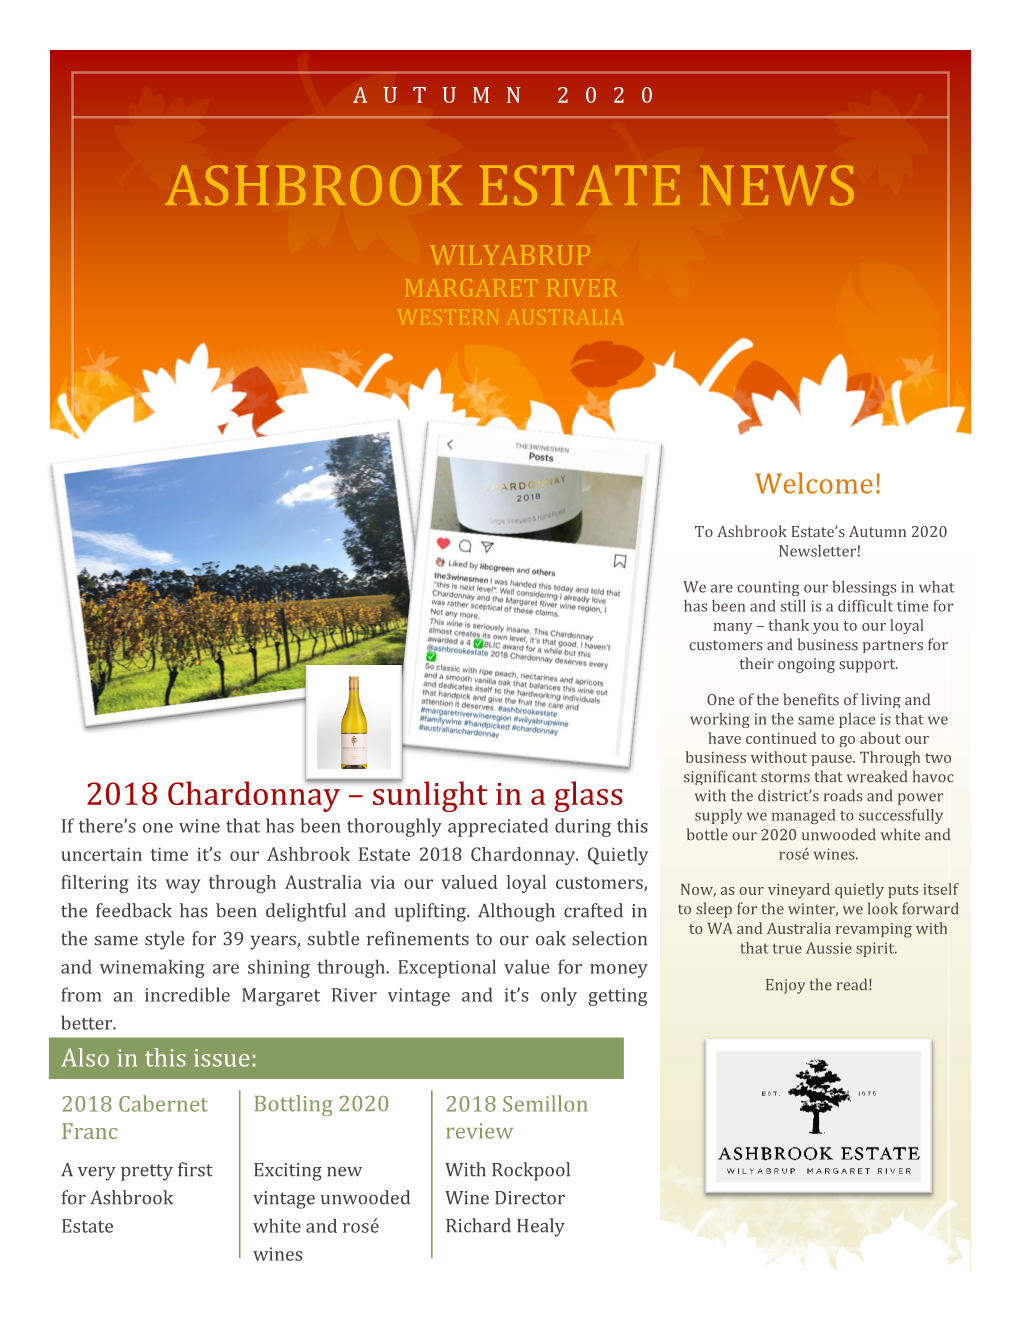 Ashbrook Estate News Issue 8 – Autumn 2020